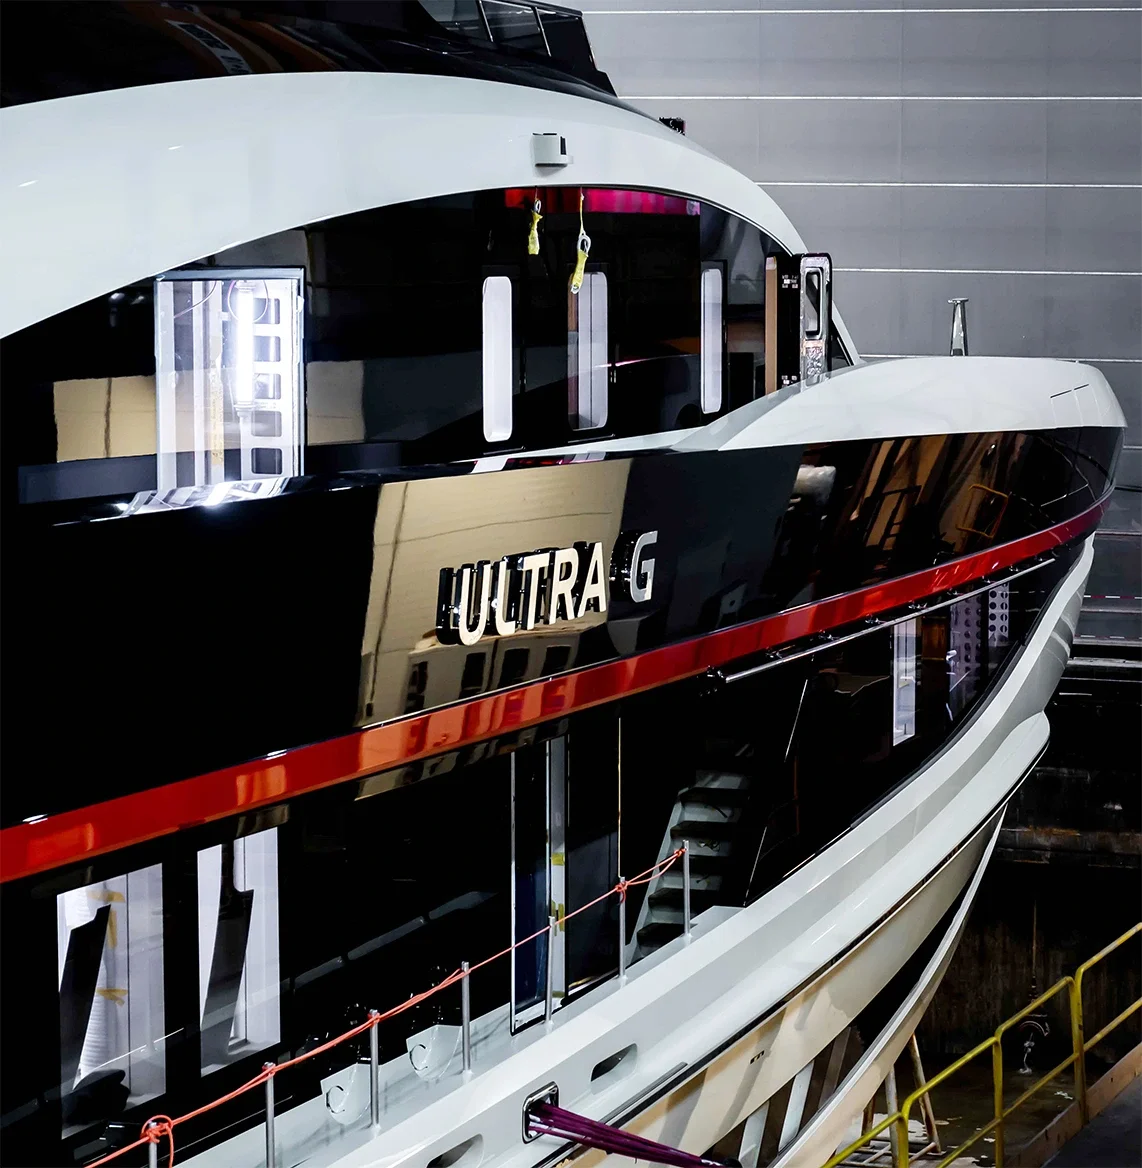 New superyacht Ultra G is speedy, powerful - and dog-friendly